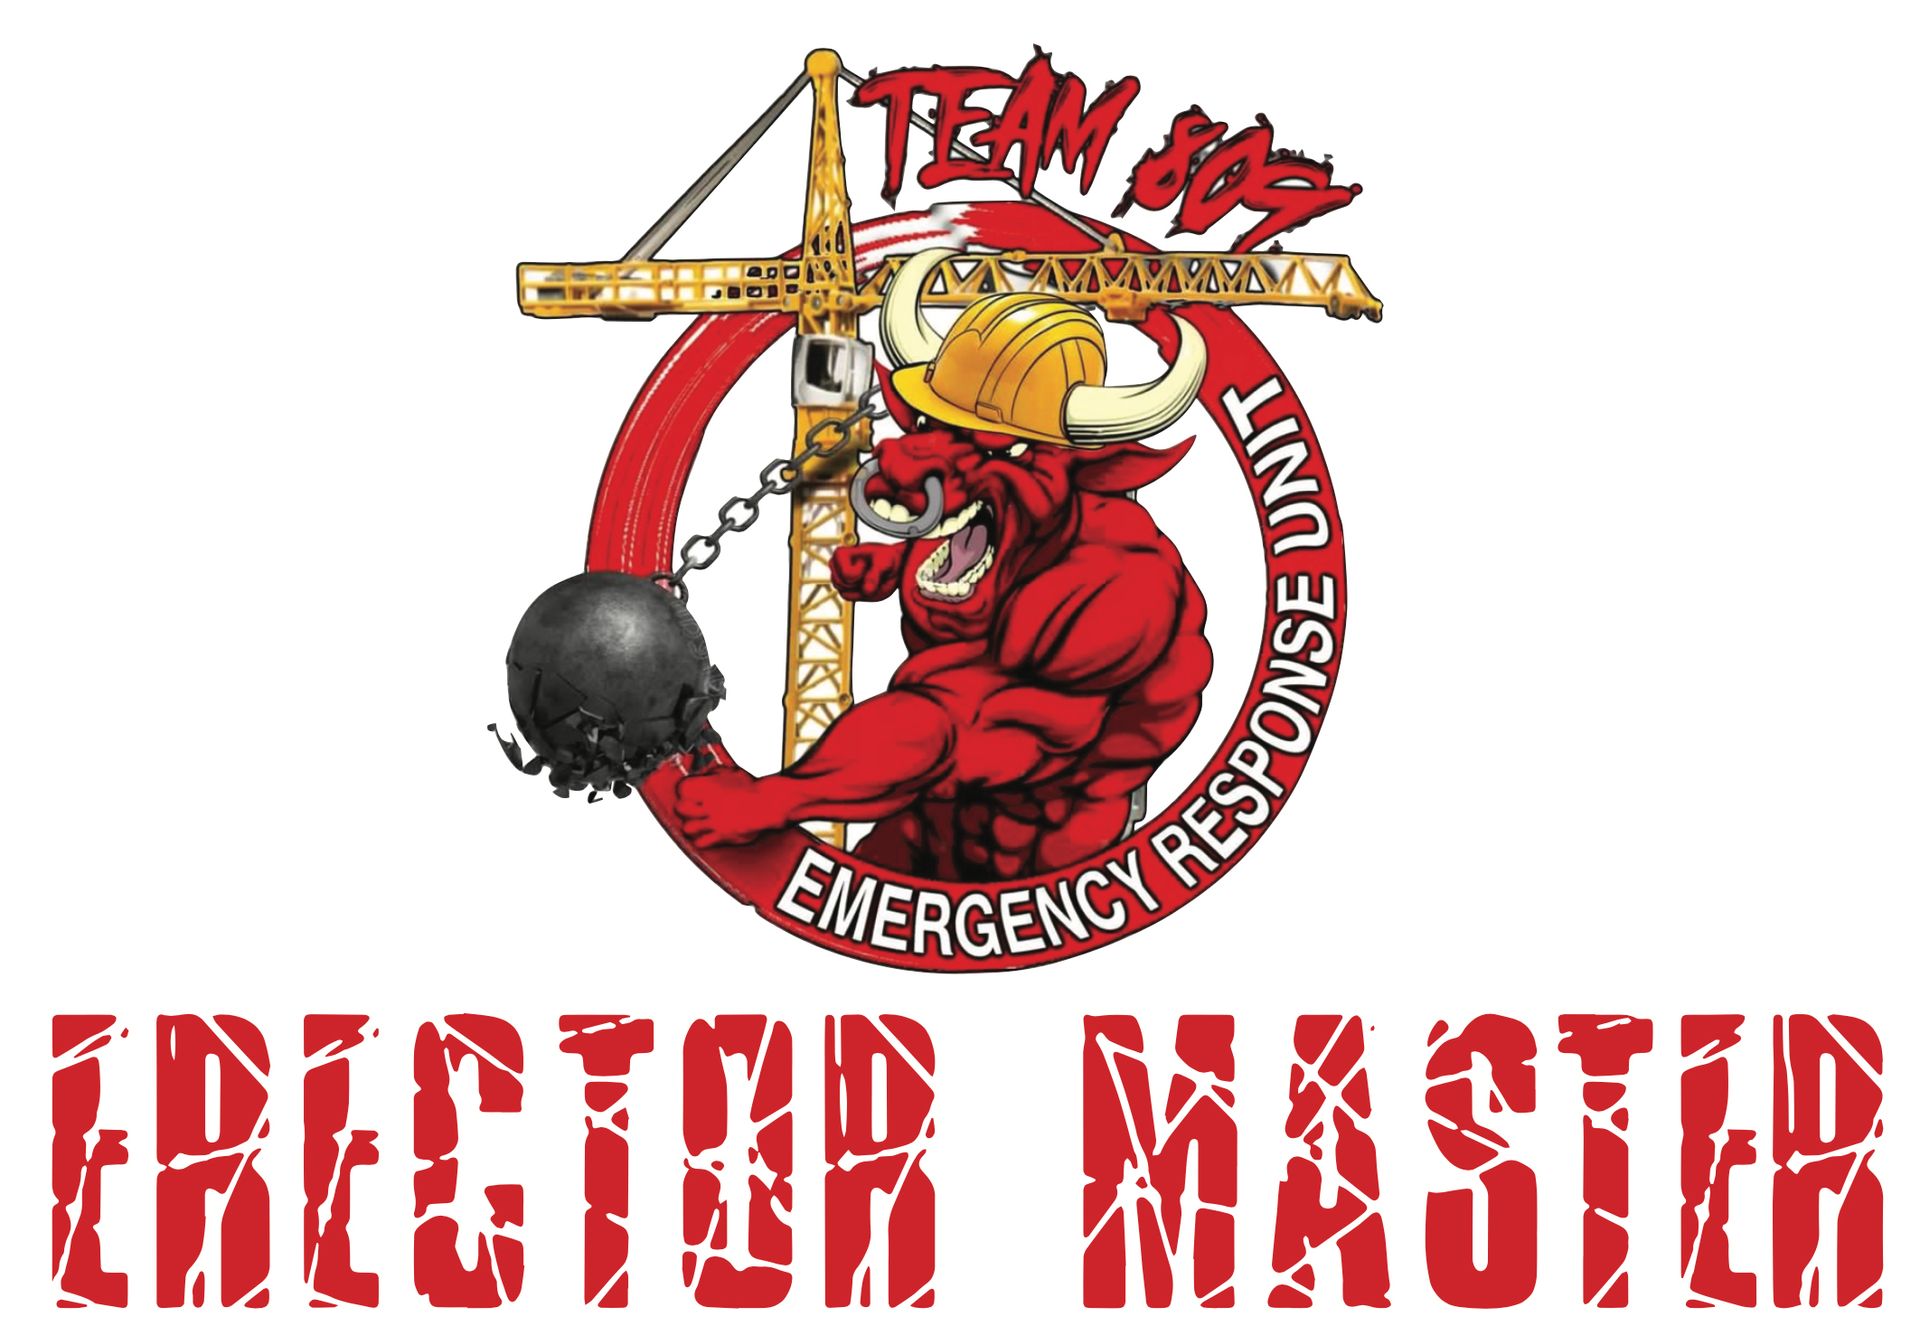 Erector Master